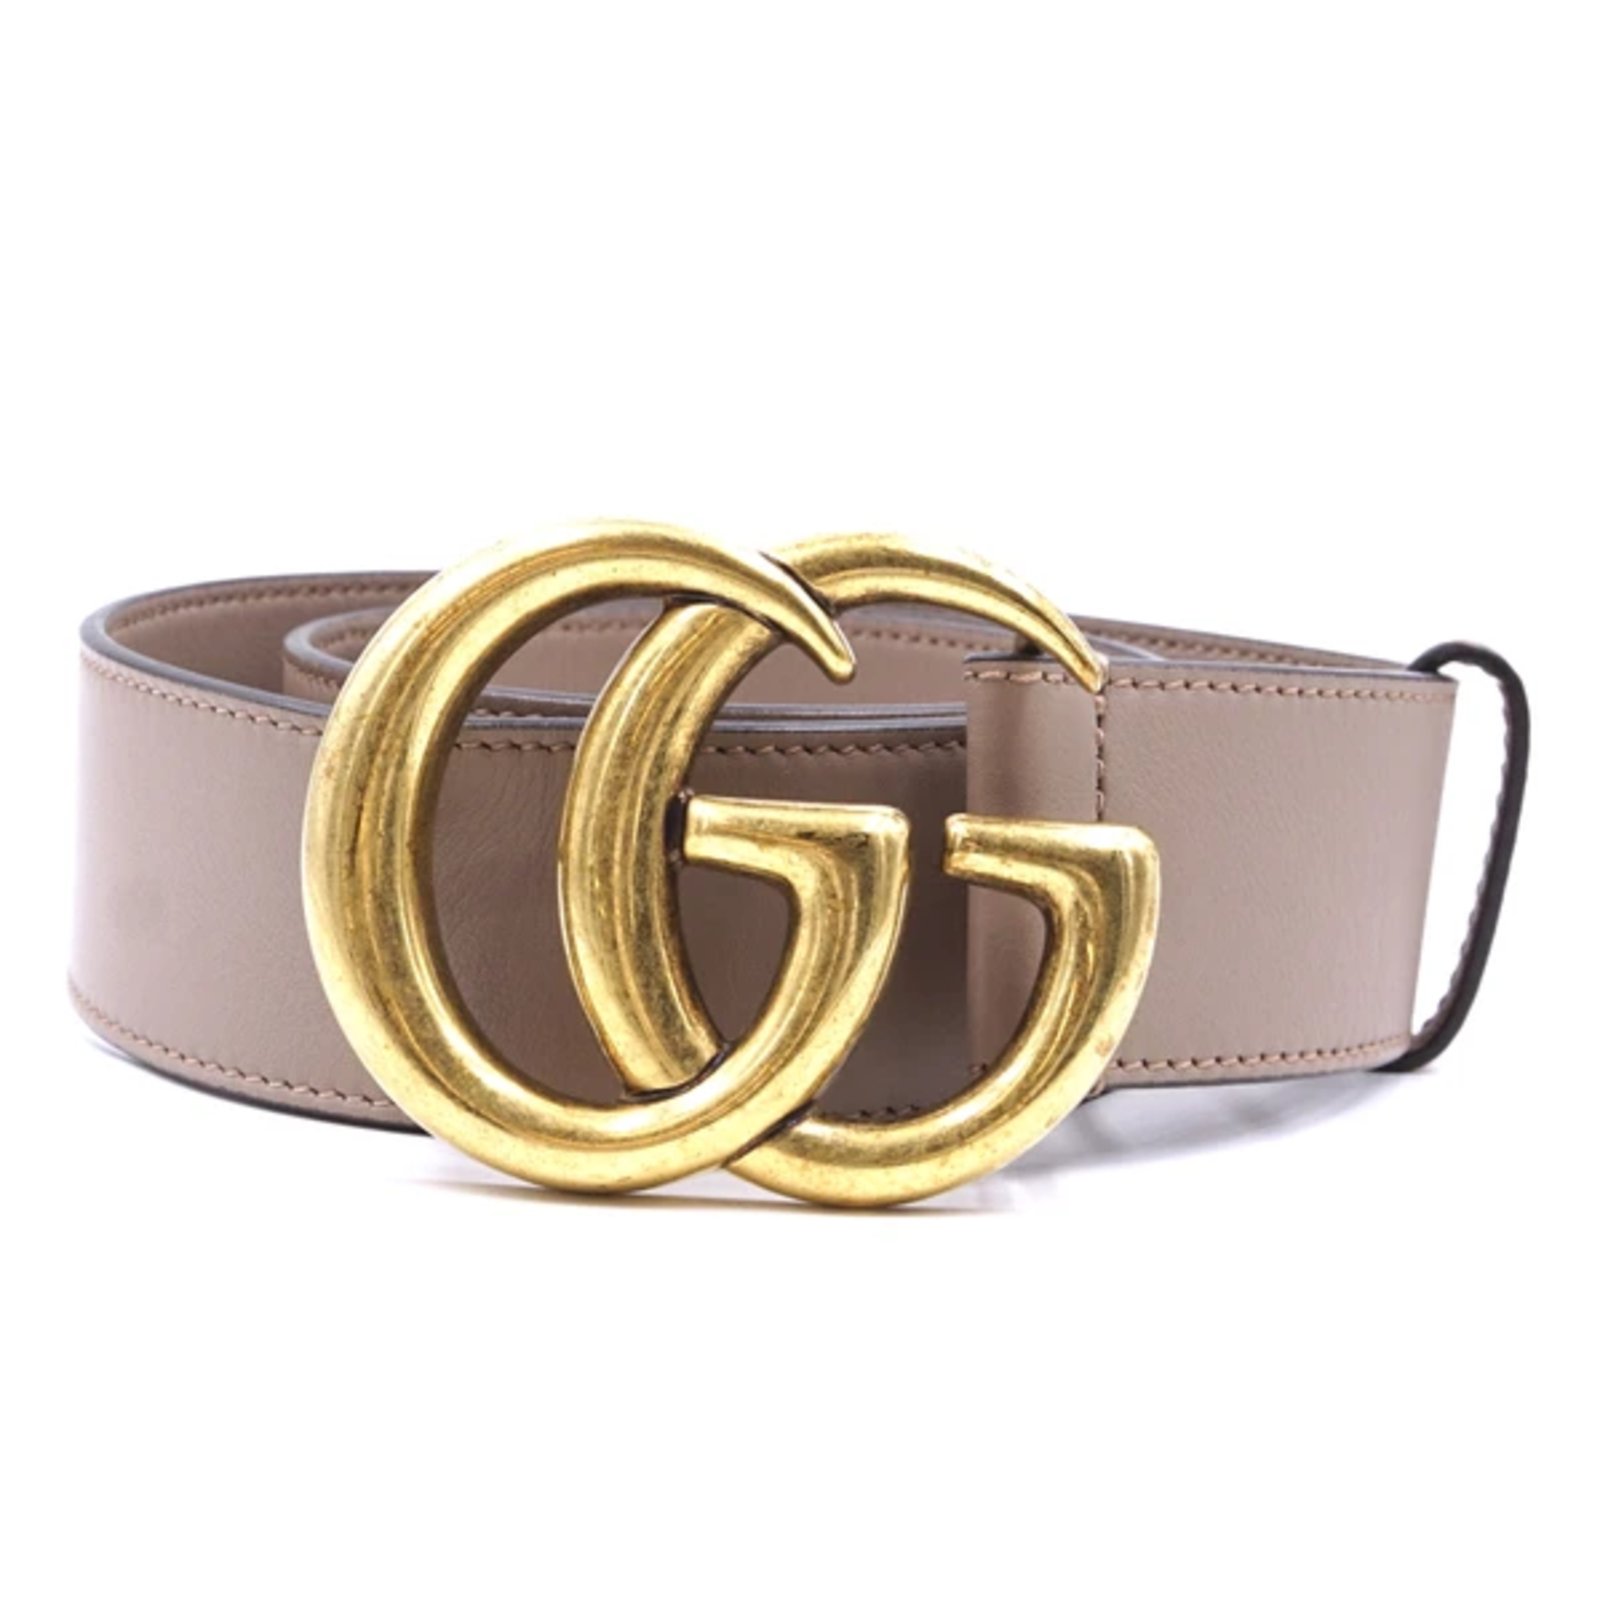 gucci size 80 belt